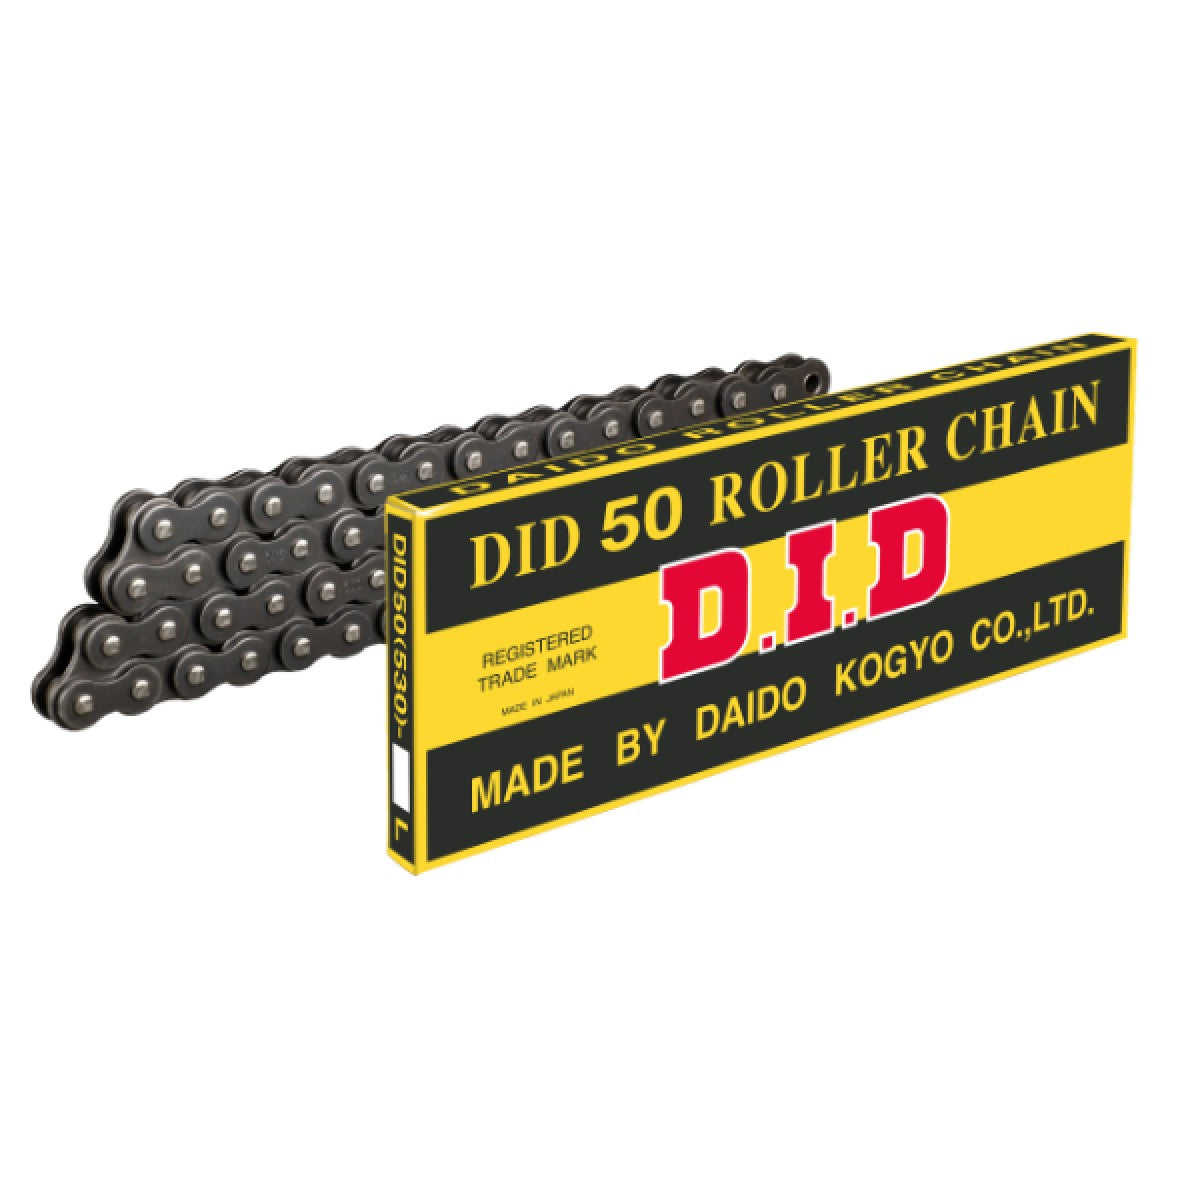 DID 530/50-114 RB STANDARD Drive Chain